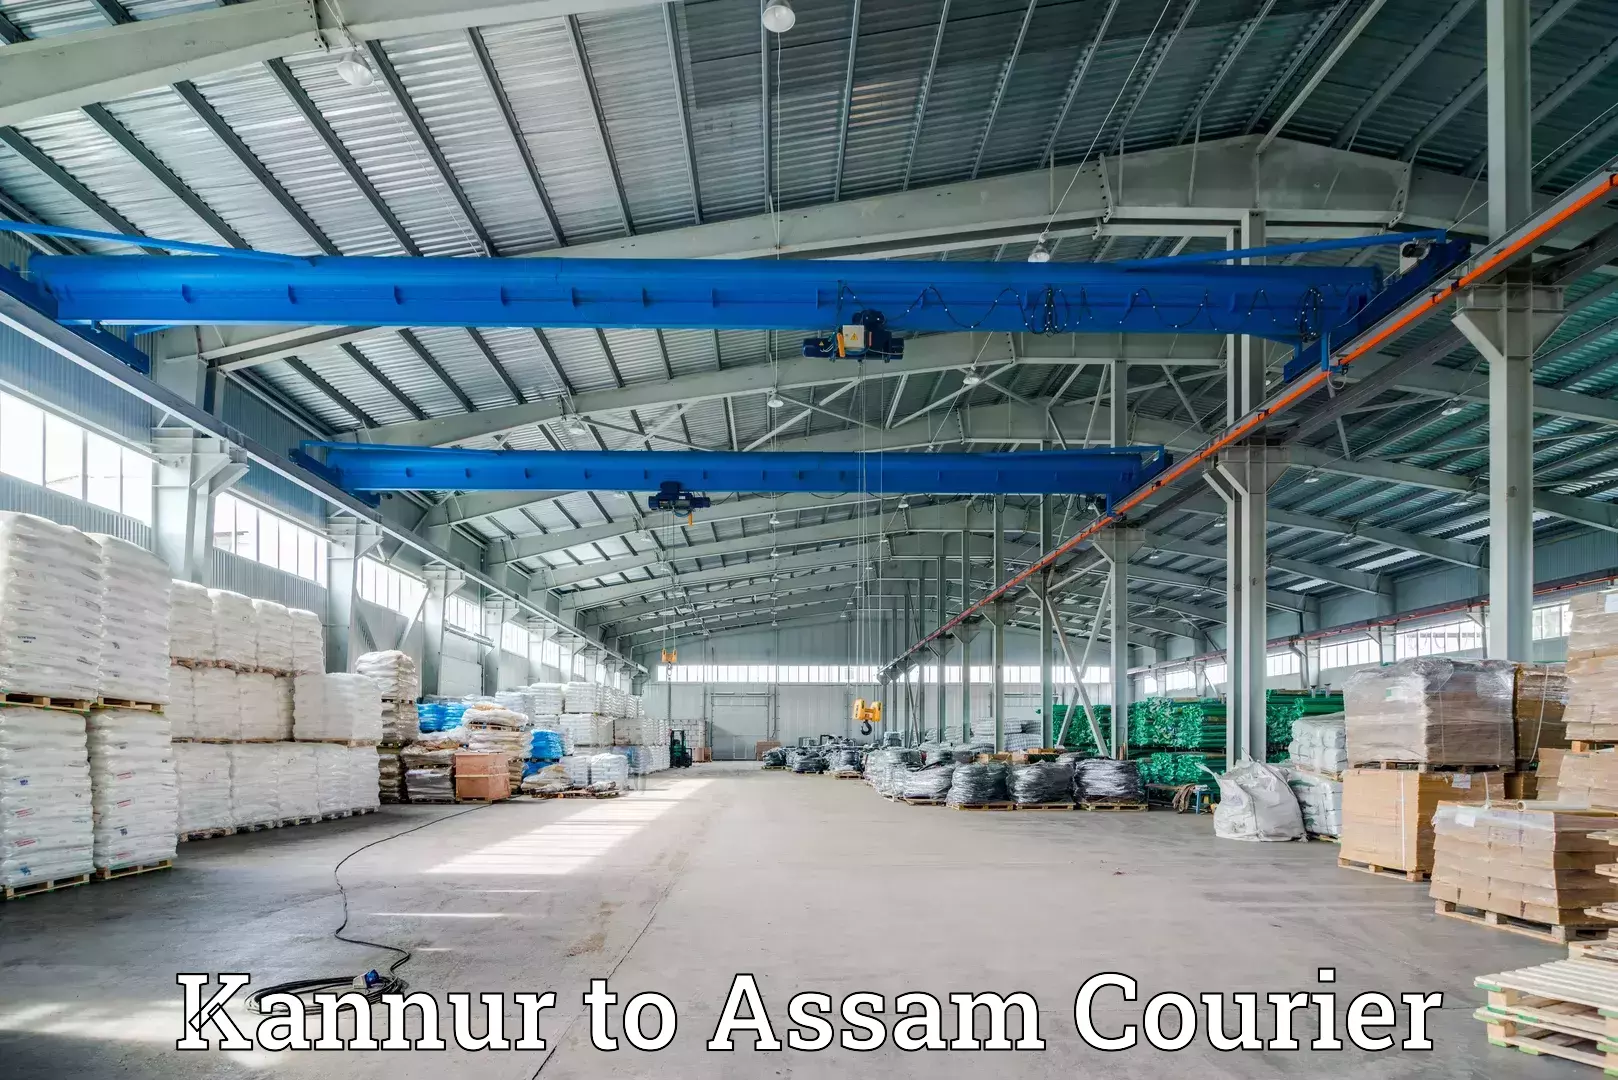 Courier service booking Kannur to Assam